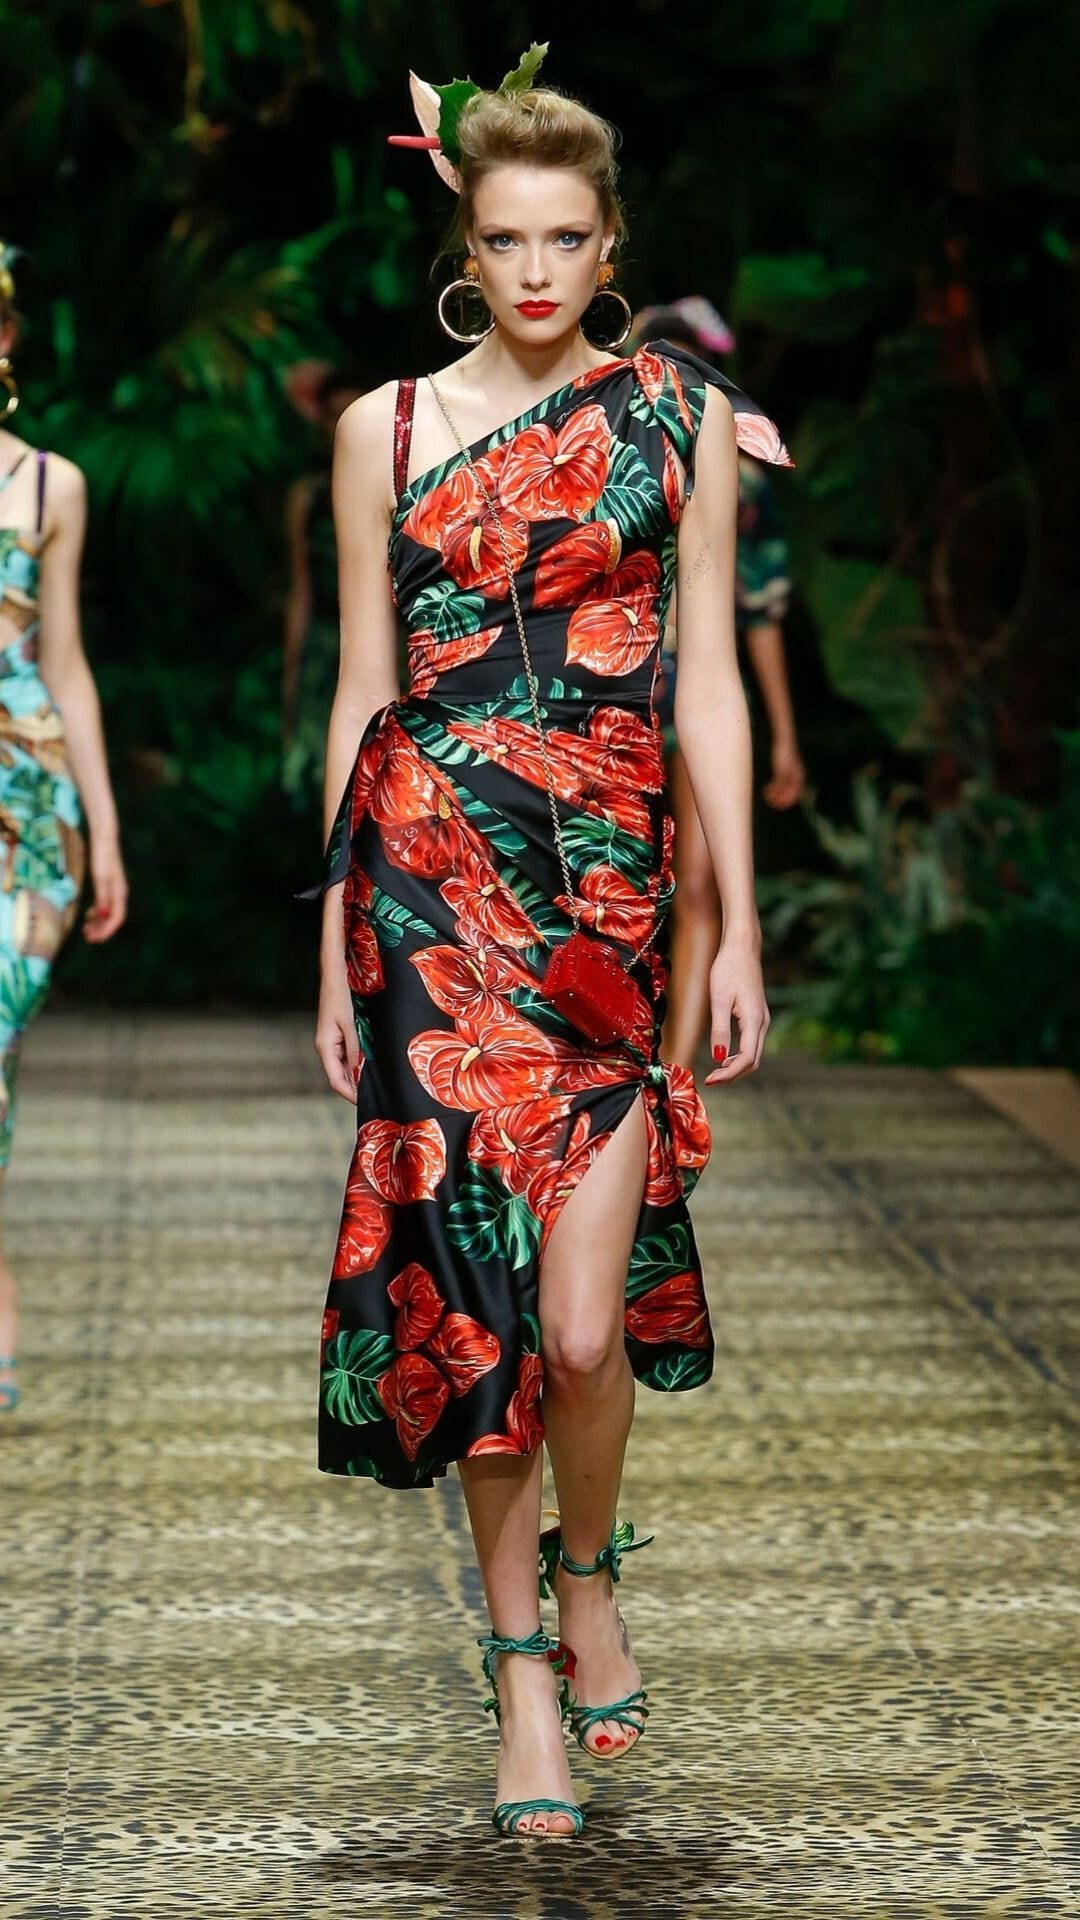 Dolce & Gabbana One-Shoulder Longuette Dress In Charmeuse